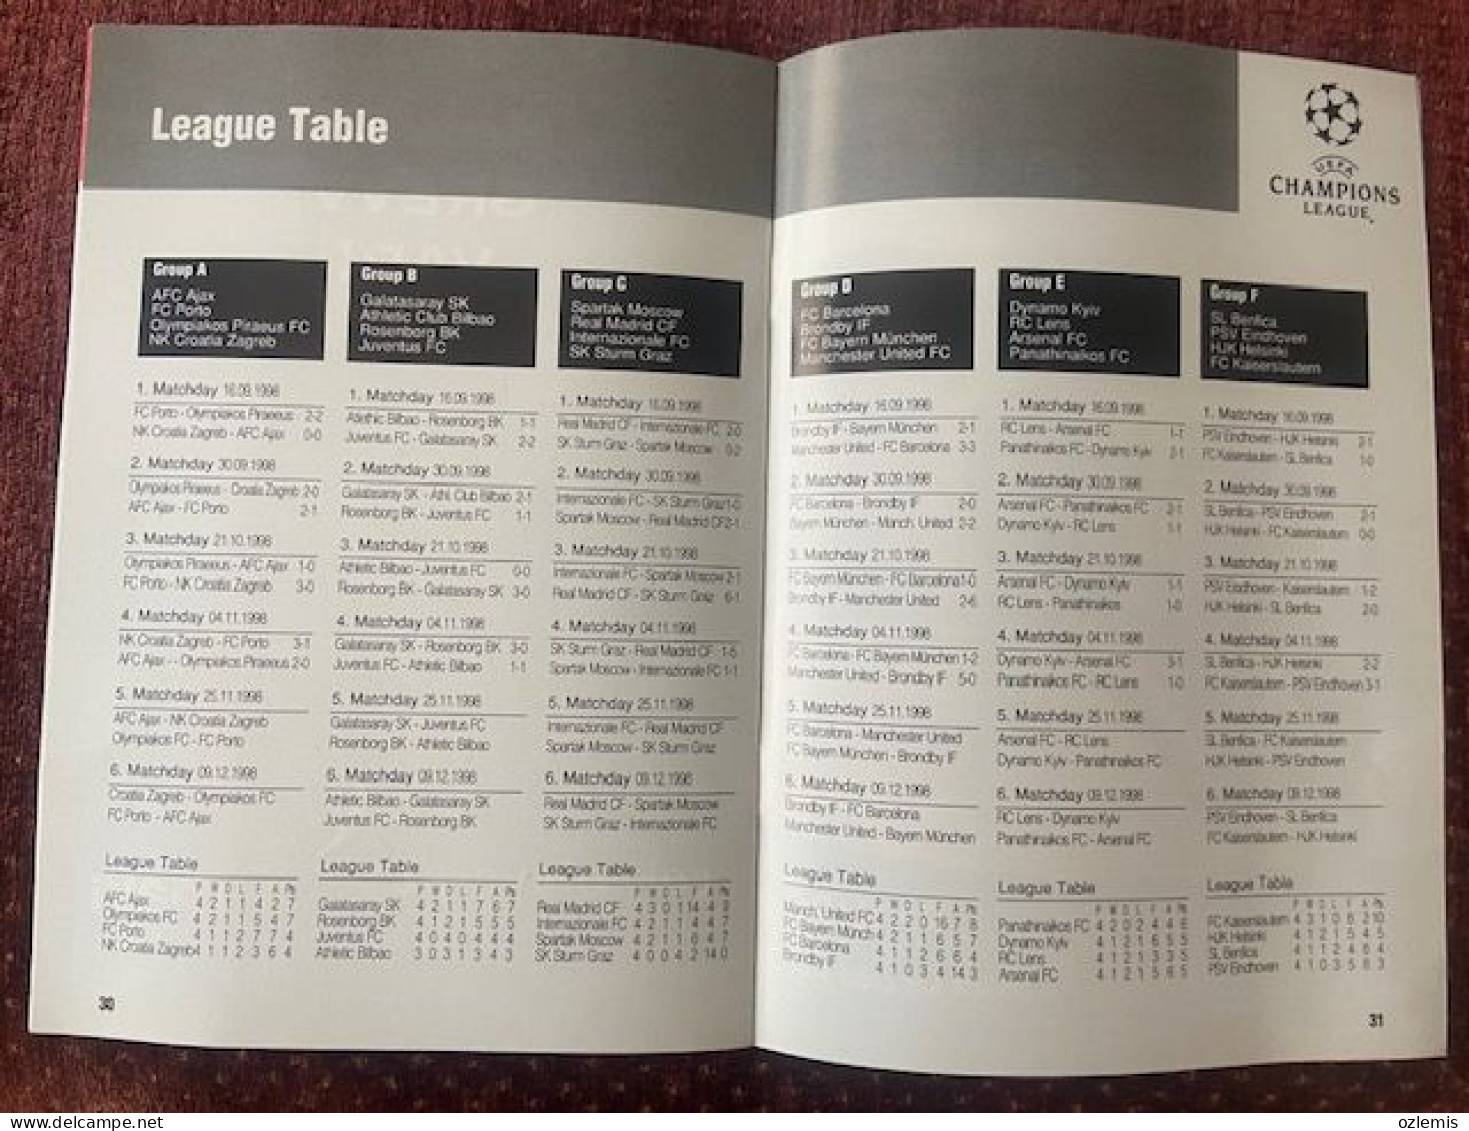 GALATASARAY - JUVENTUS FC  ,UEFA CHAMPIONS LEAGUE ,MATCH SCHEDULE ,1998 - Libros